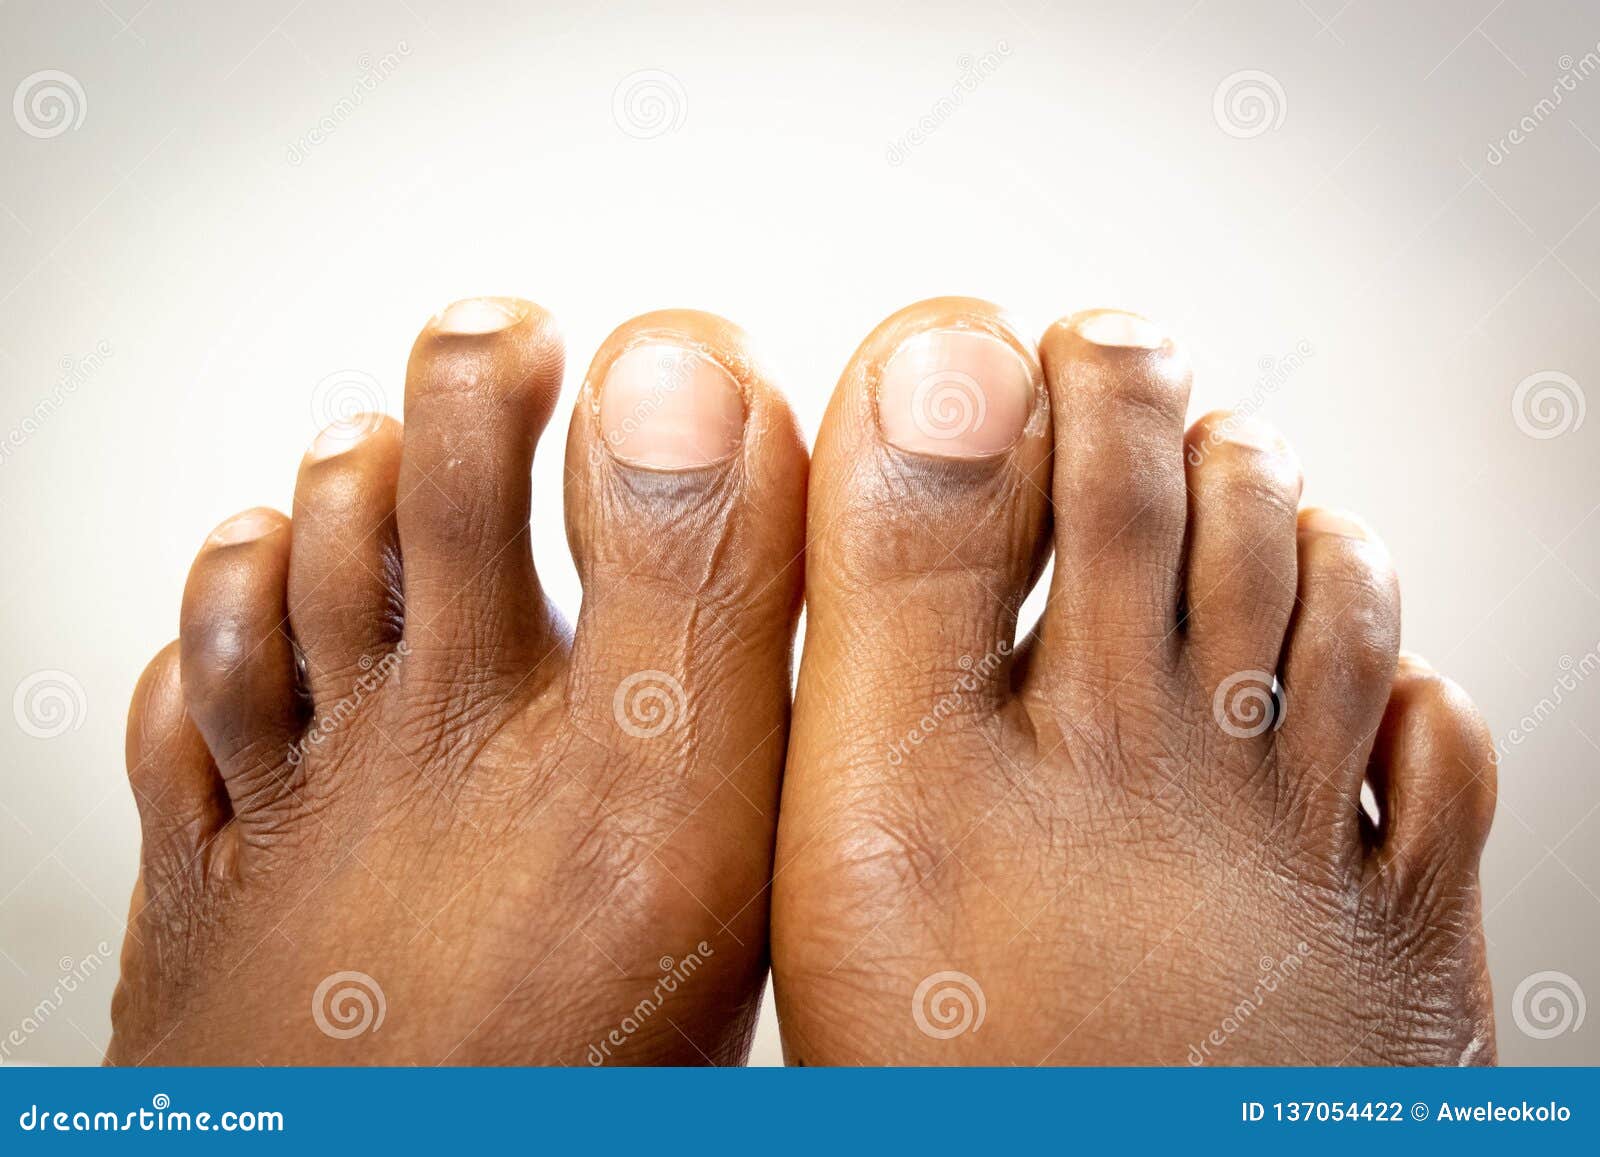 Feet girl ebony 